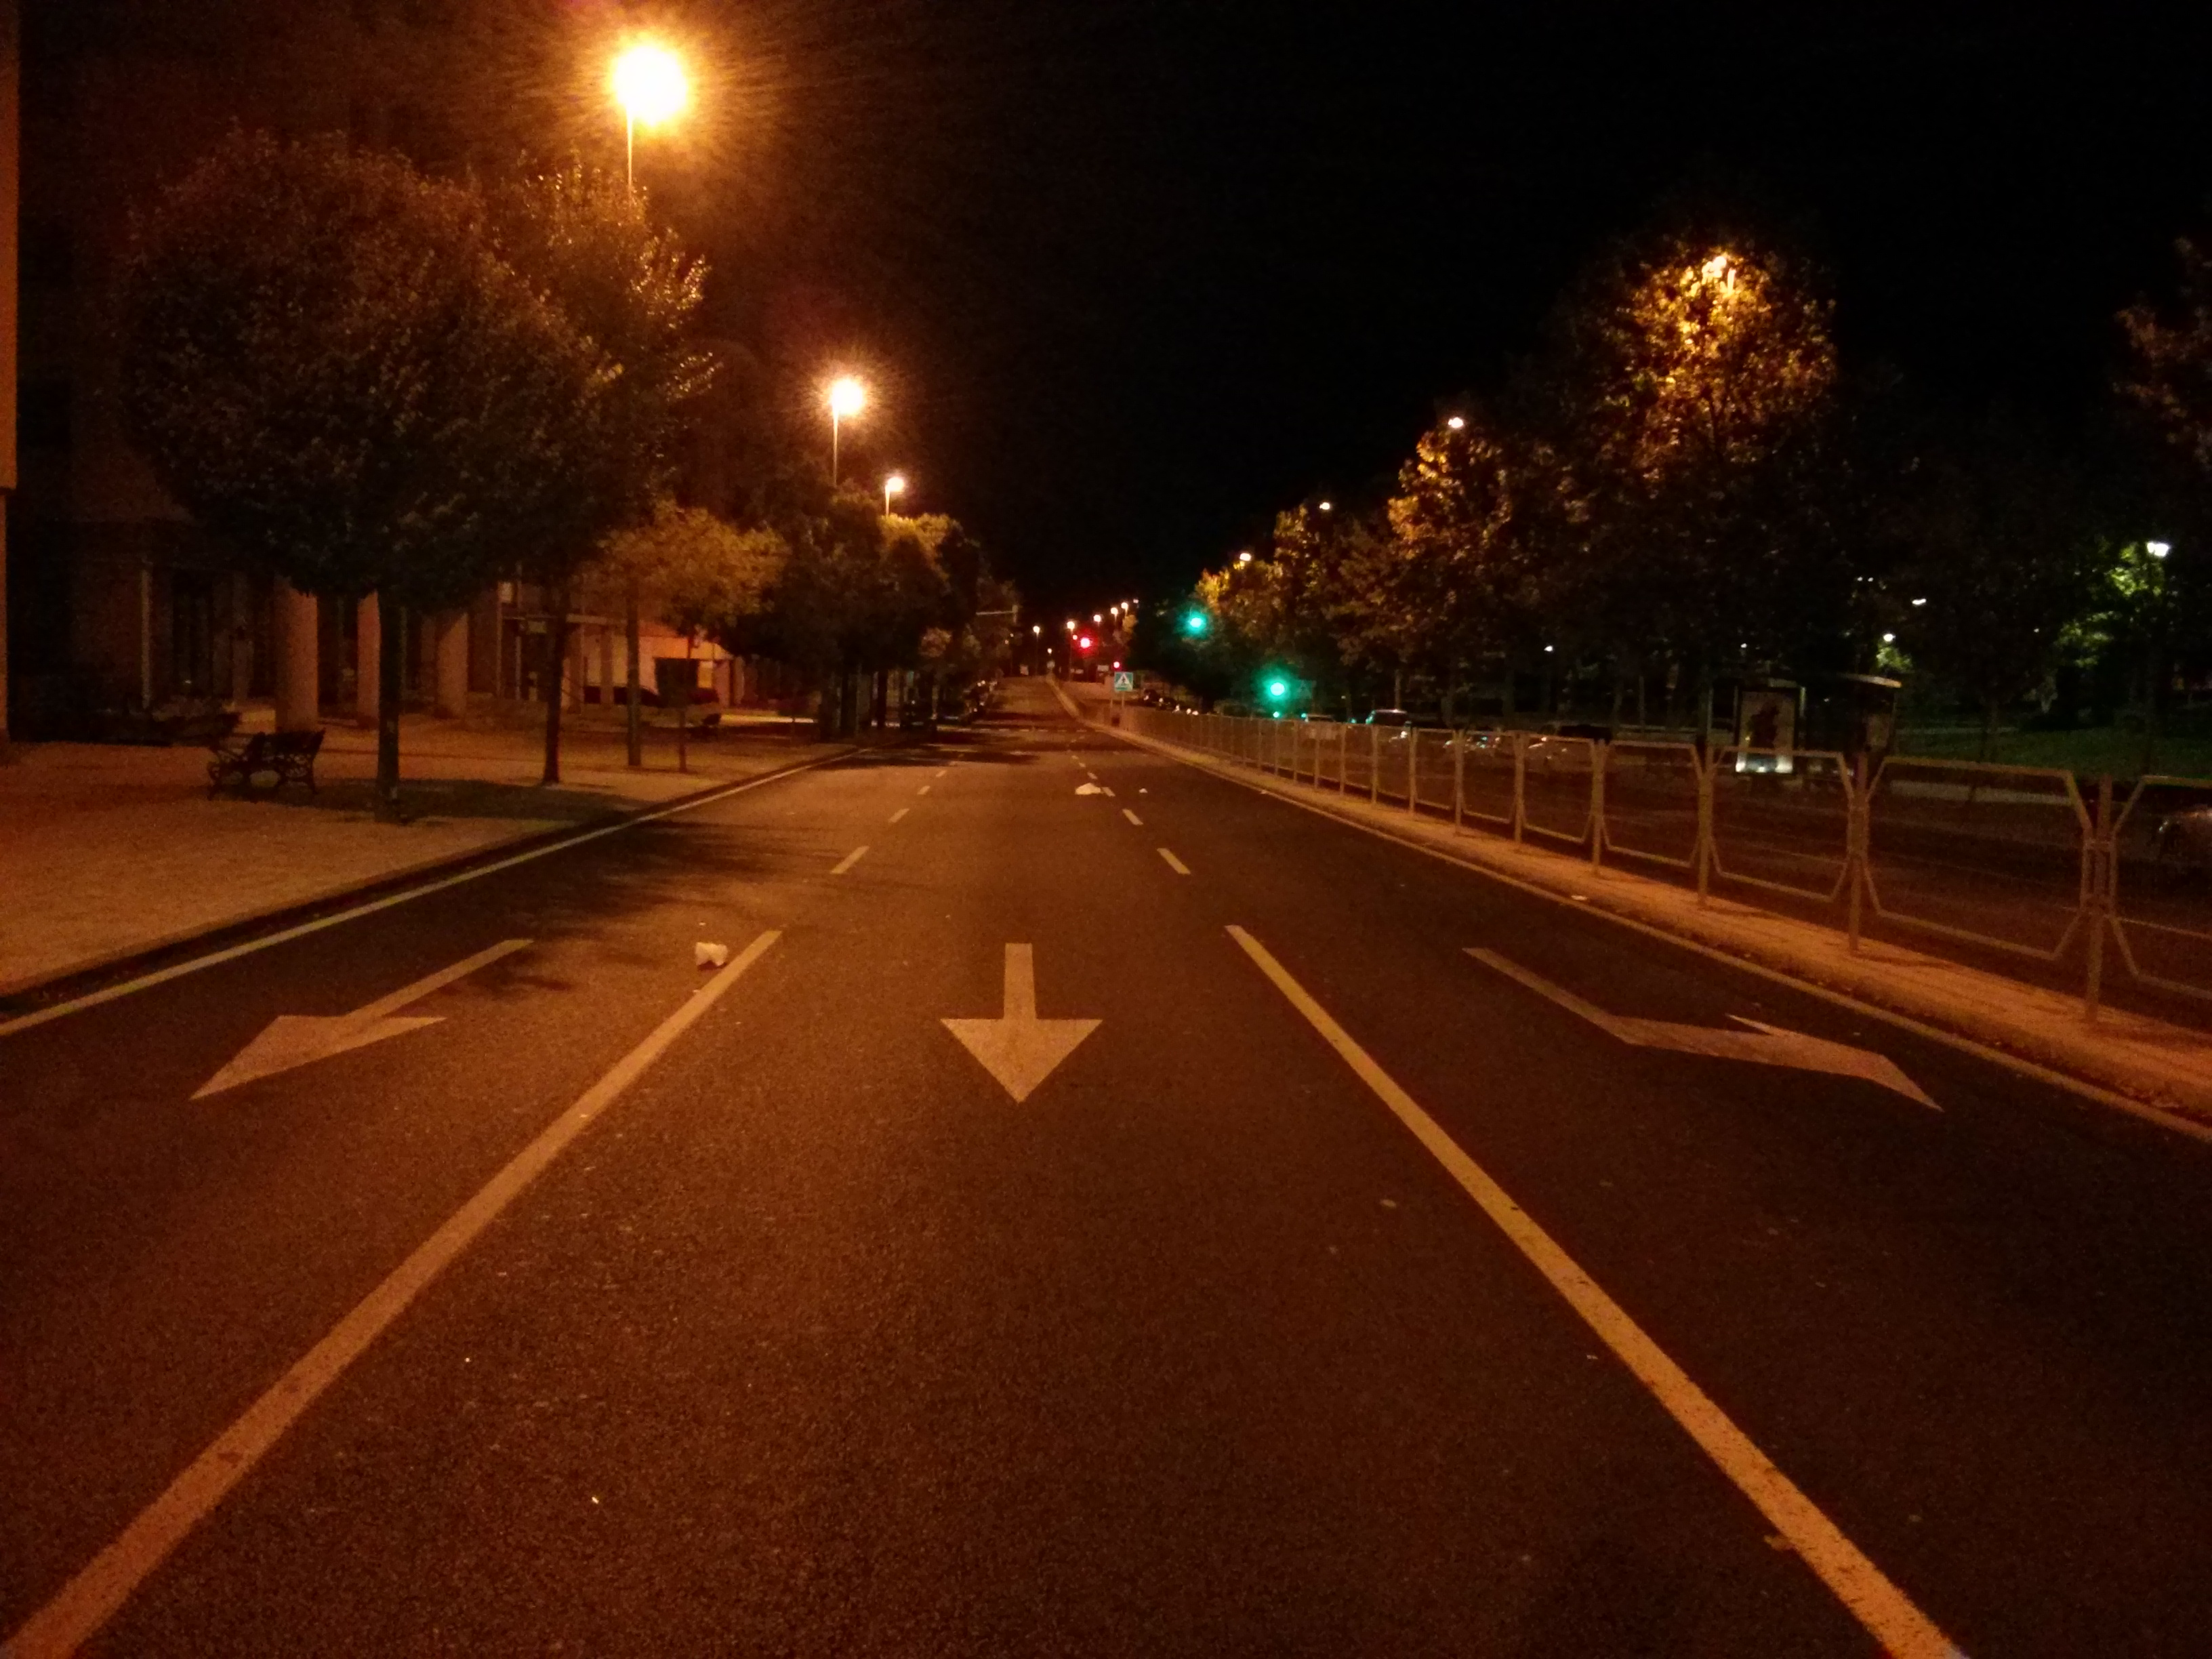 File:Empty road at night.jpg - Wikimedia Commons